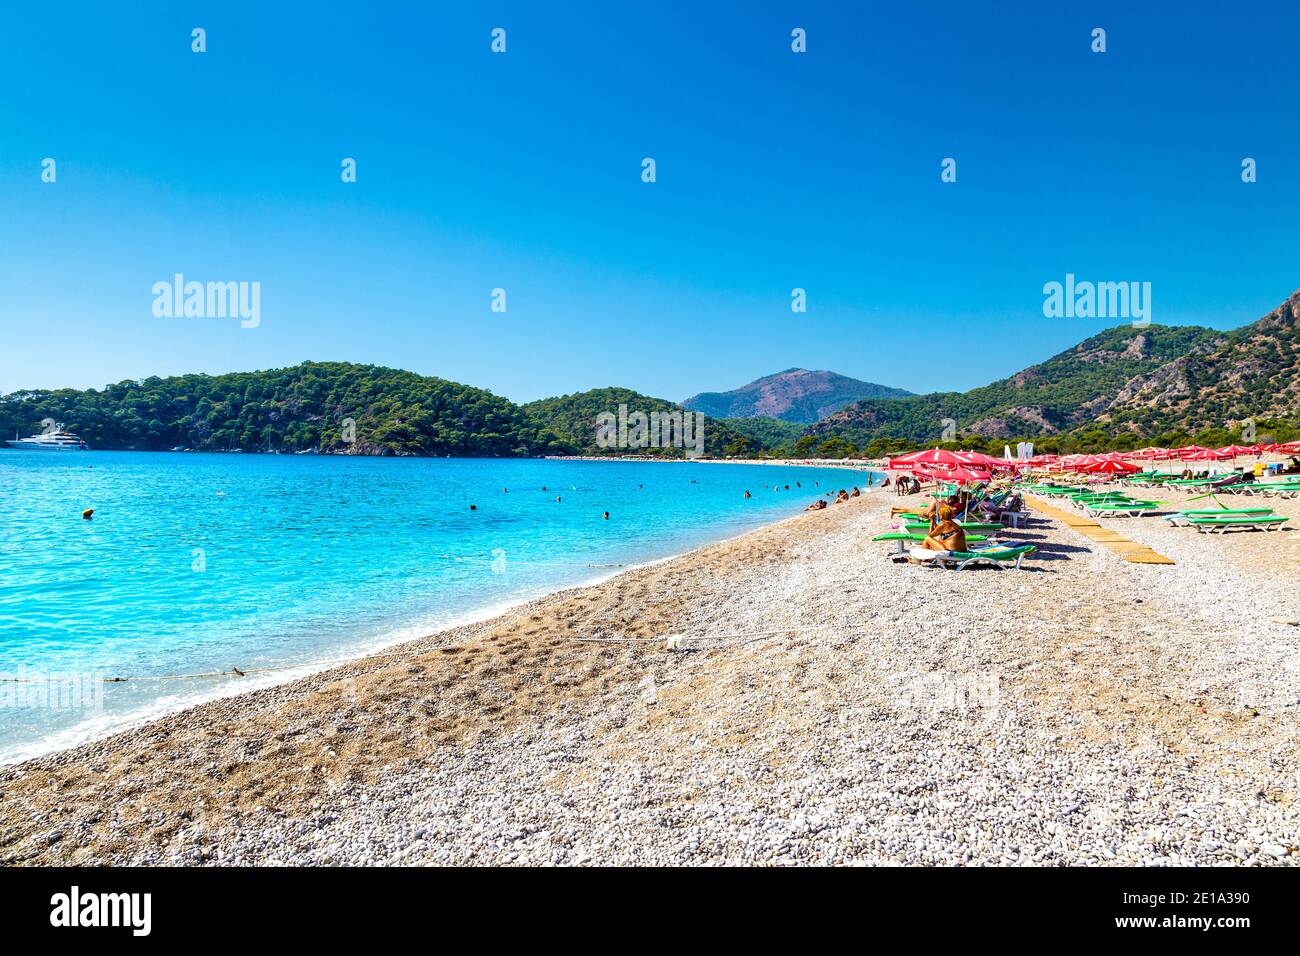 Beach with parasols and sun loungers at Oludeniz, Turkish Riviera, Turkey Stock Photo